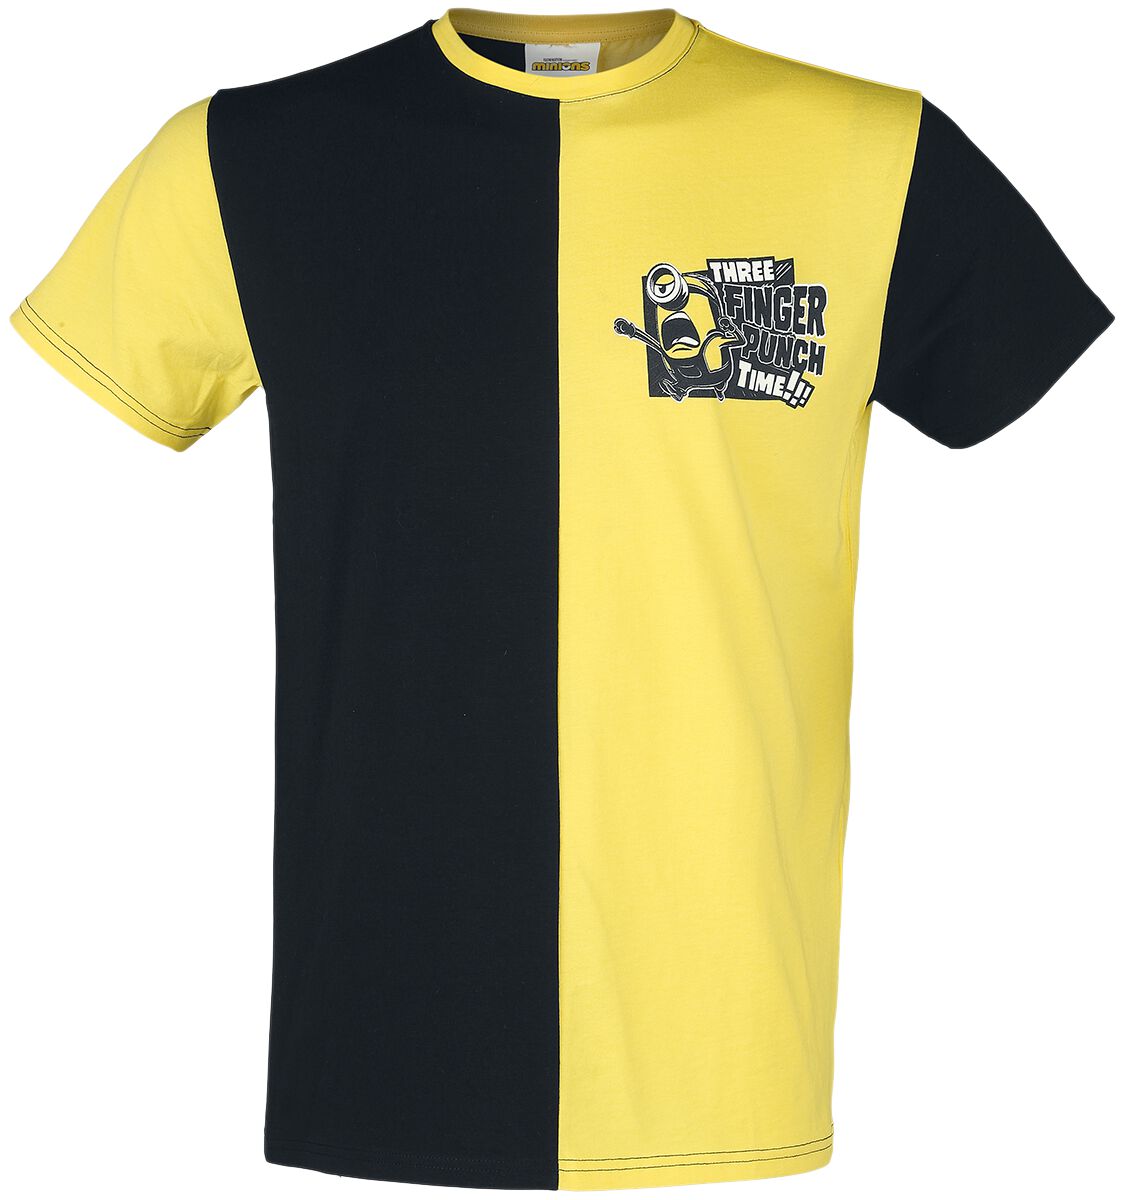 Minions Three Finger Punch Time!!! T-Shirt schwarz gelb